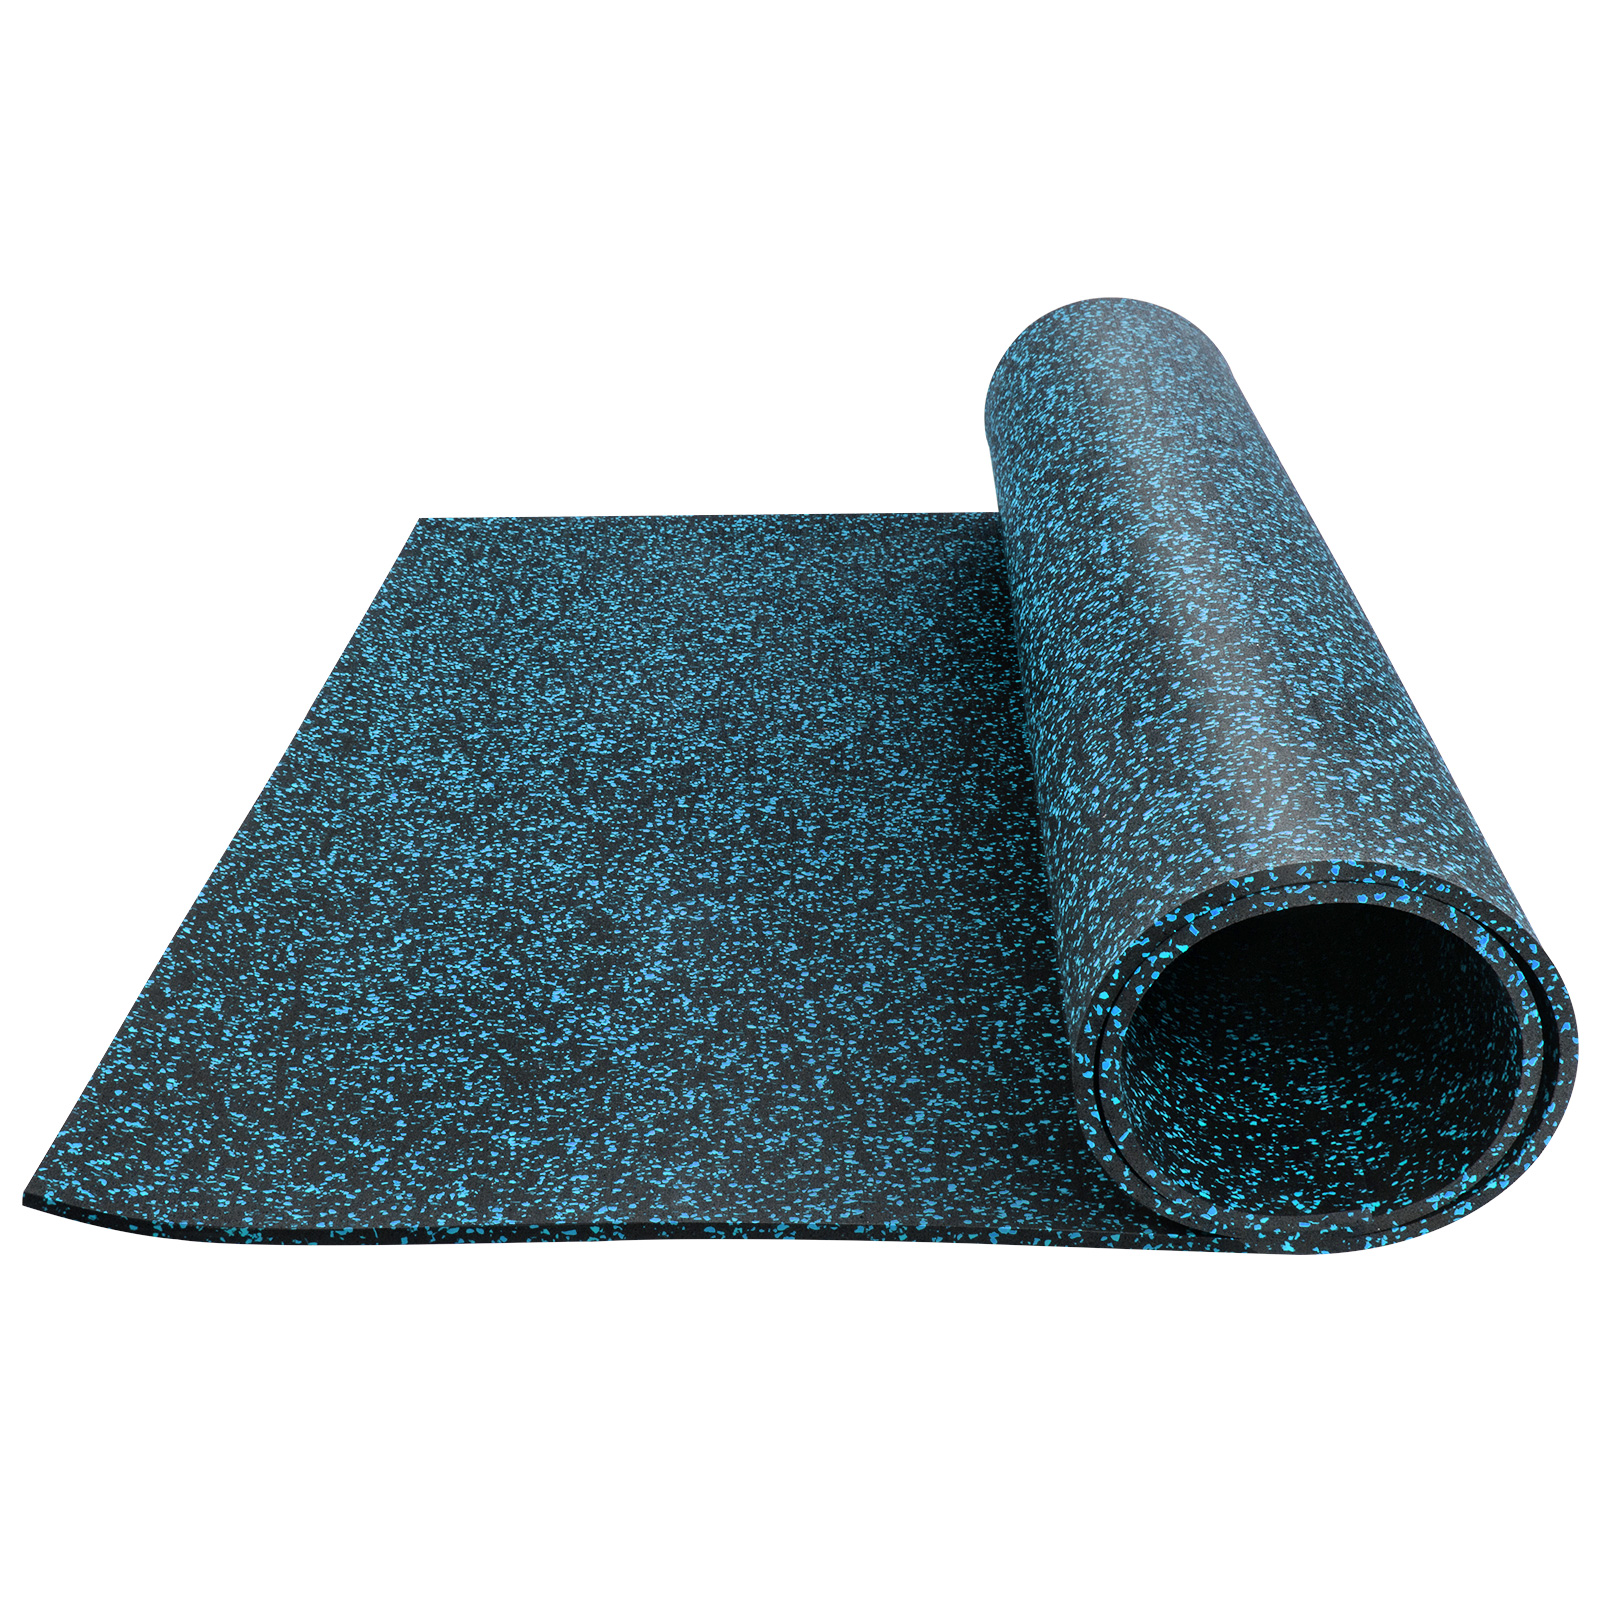 Rubber Flooring Rolls Non Toxic High Density Exercise Gym Equipment Mats Ebay